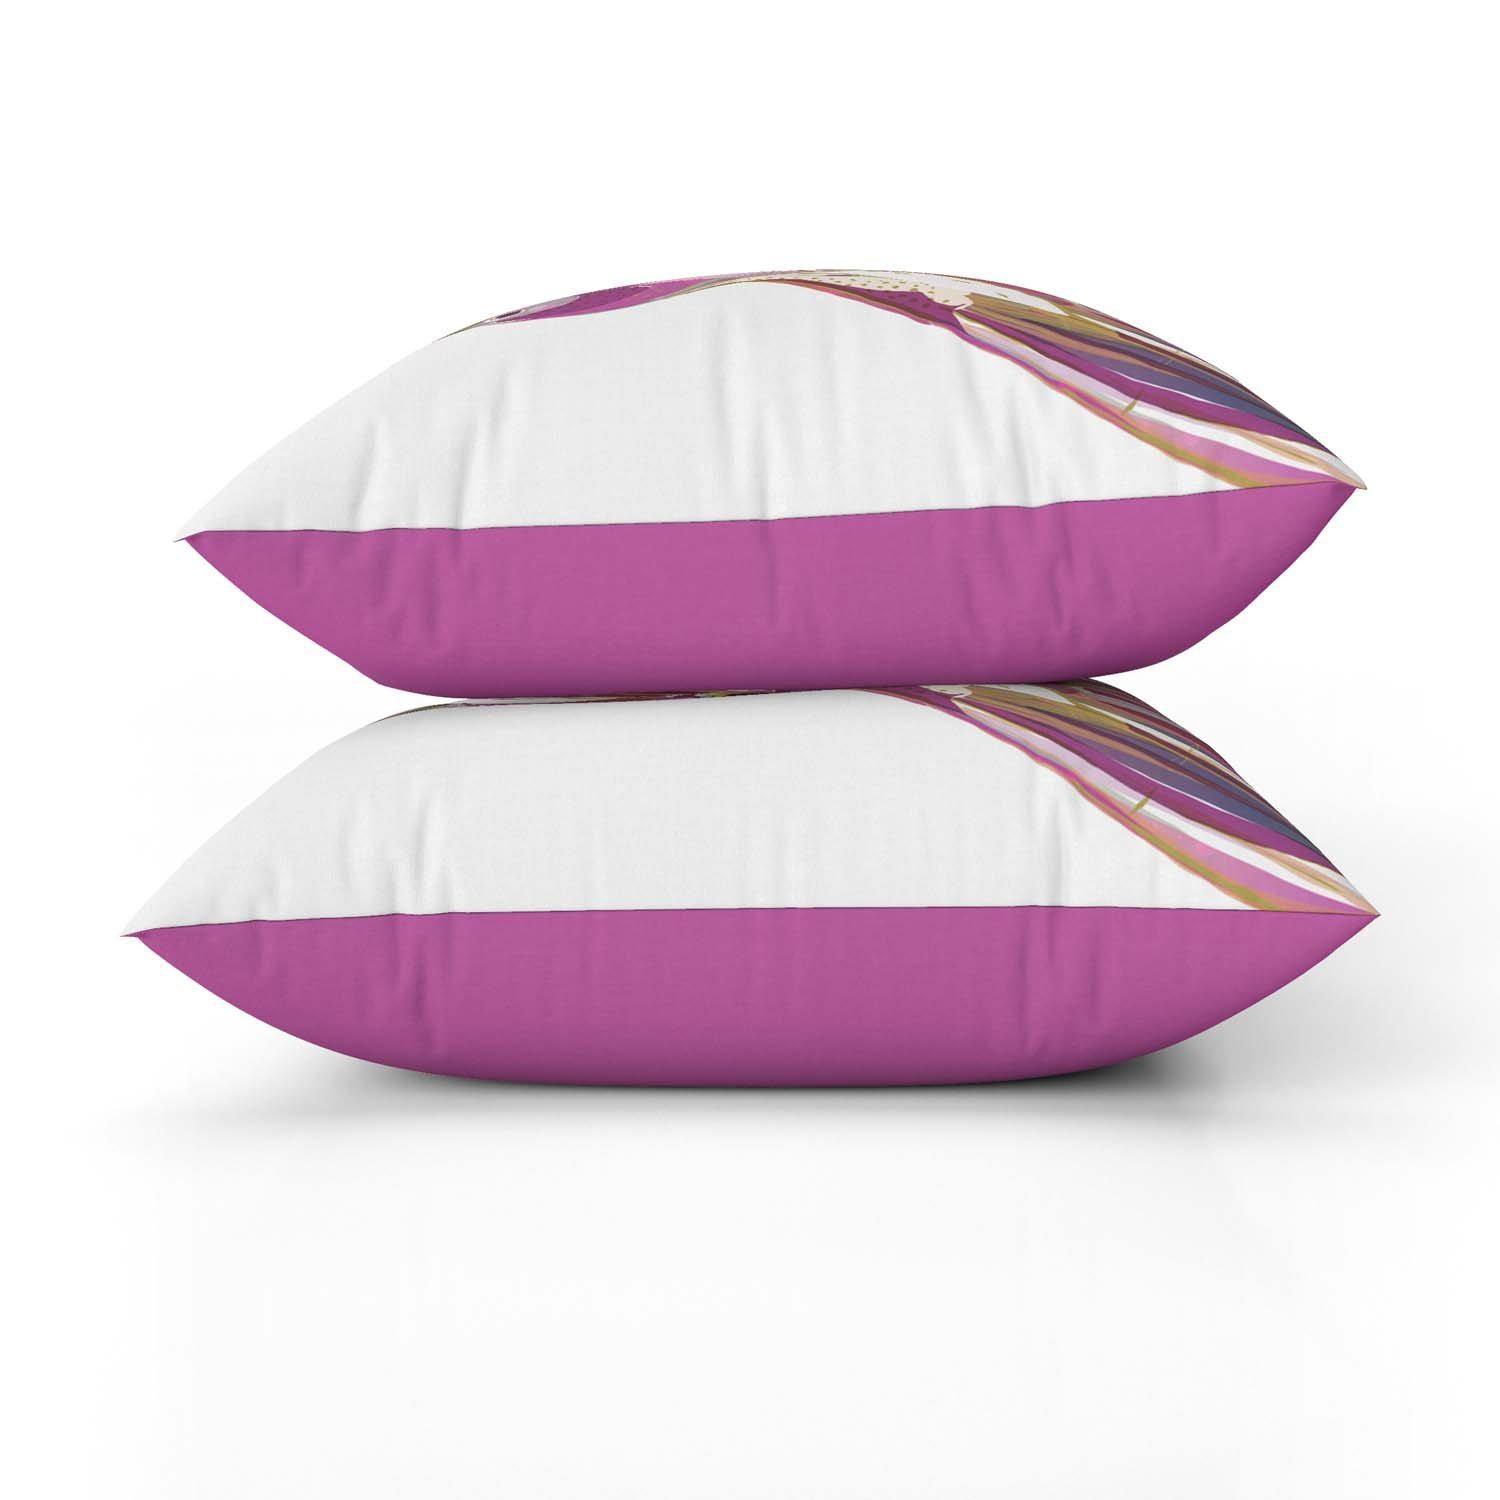 Patchwork Hummingbird (White) - Funky Art Cushion - FOG - House Of Turnowsky Pillows - Handmade Cushions UK - WeLoveCushions